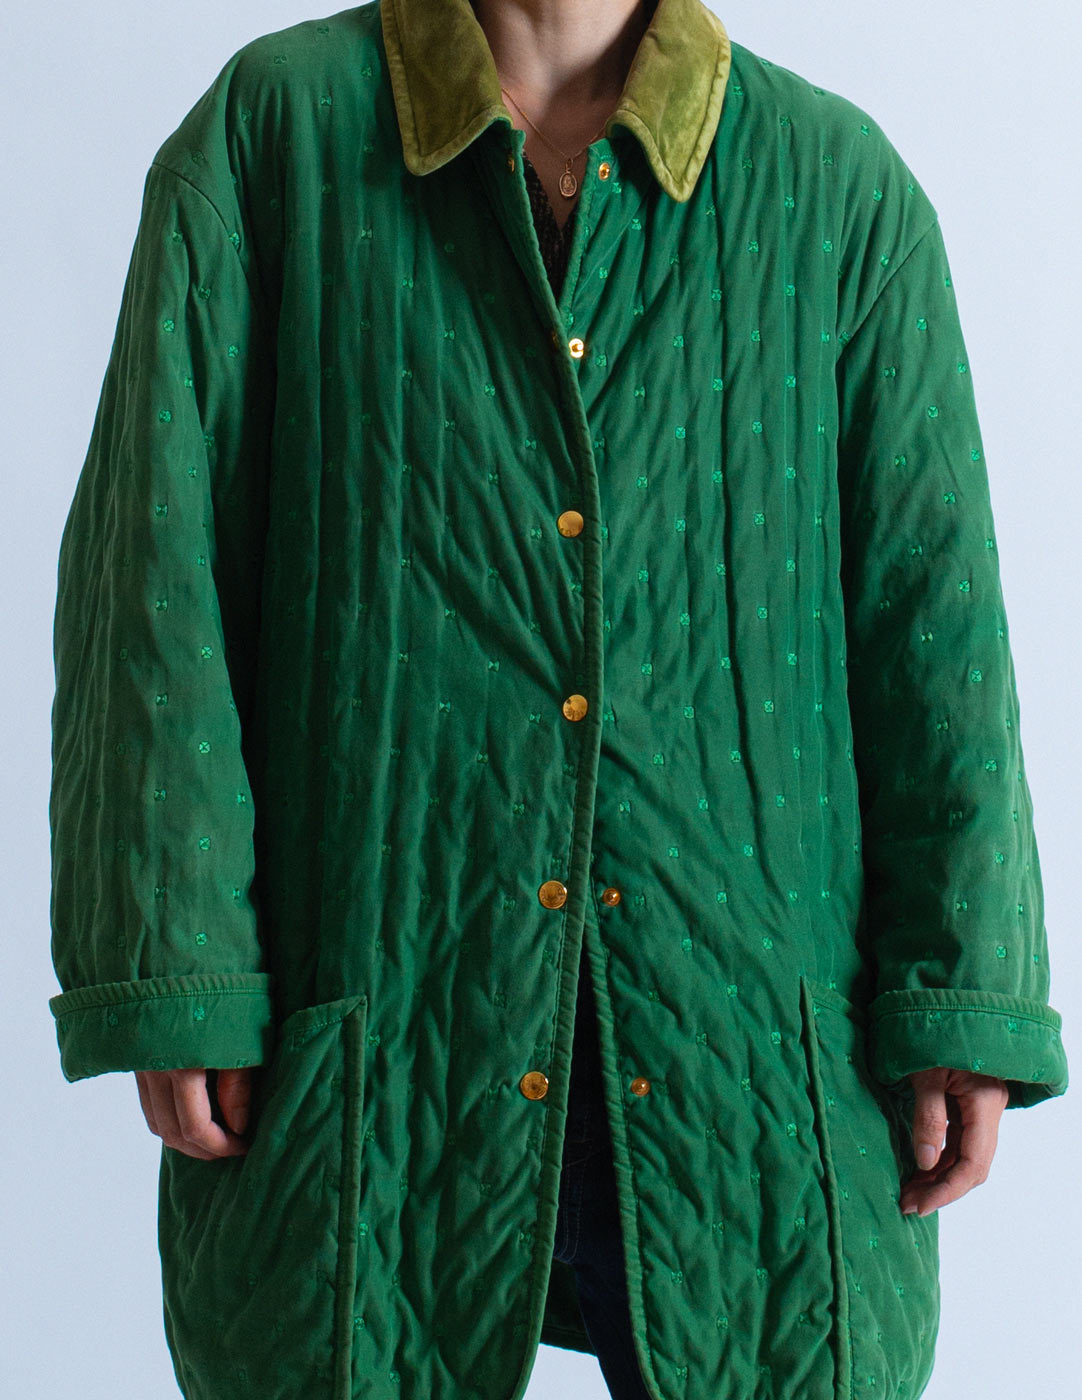 Hermès vintage green quilted coat front detail